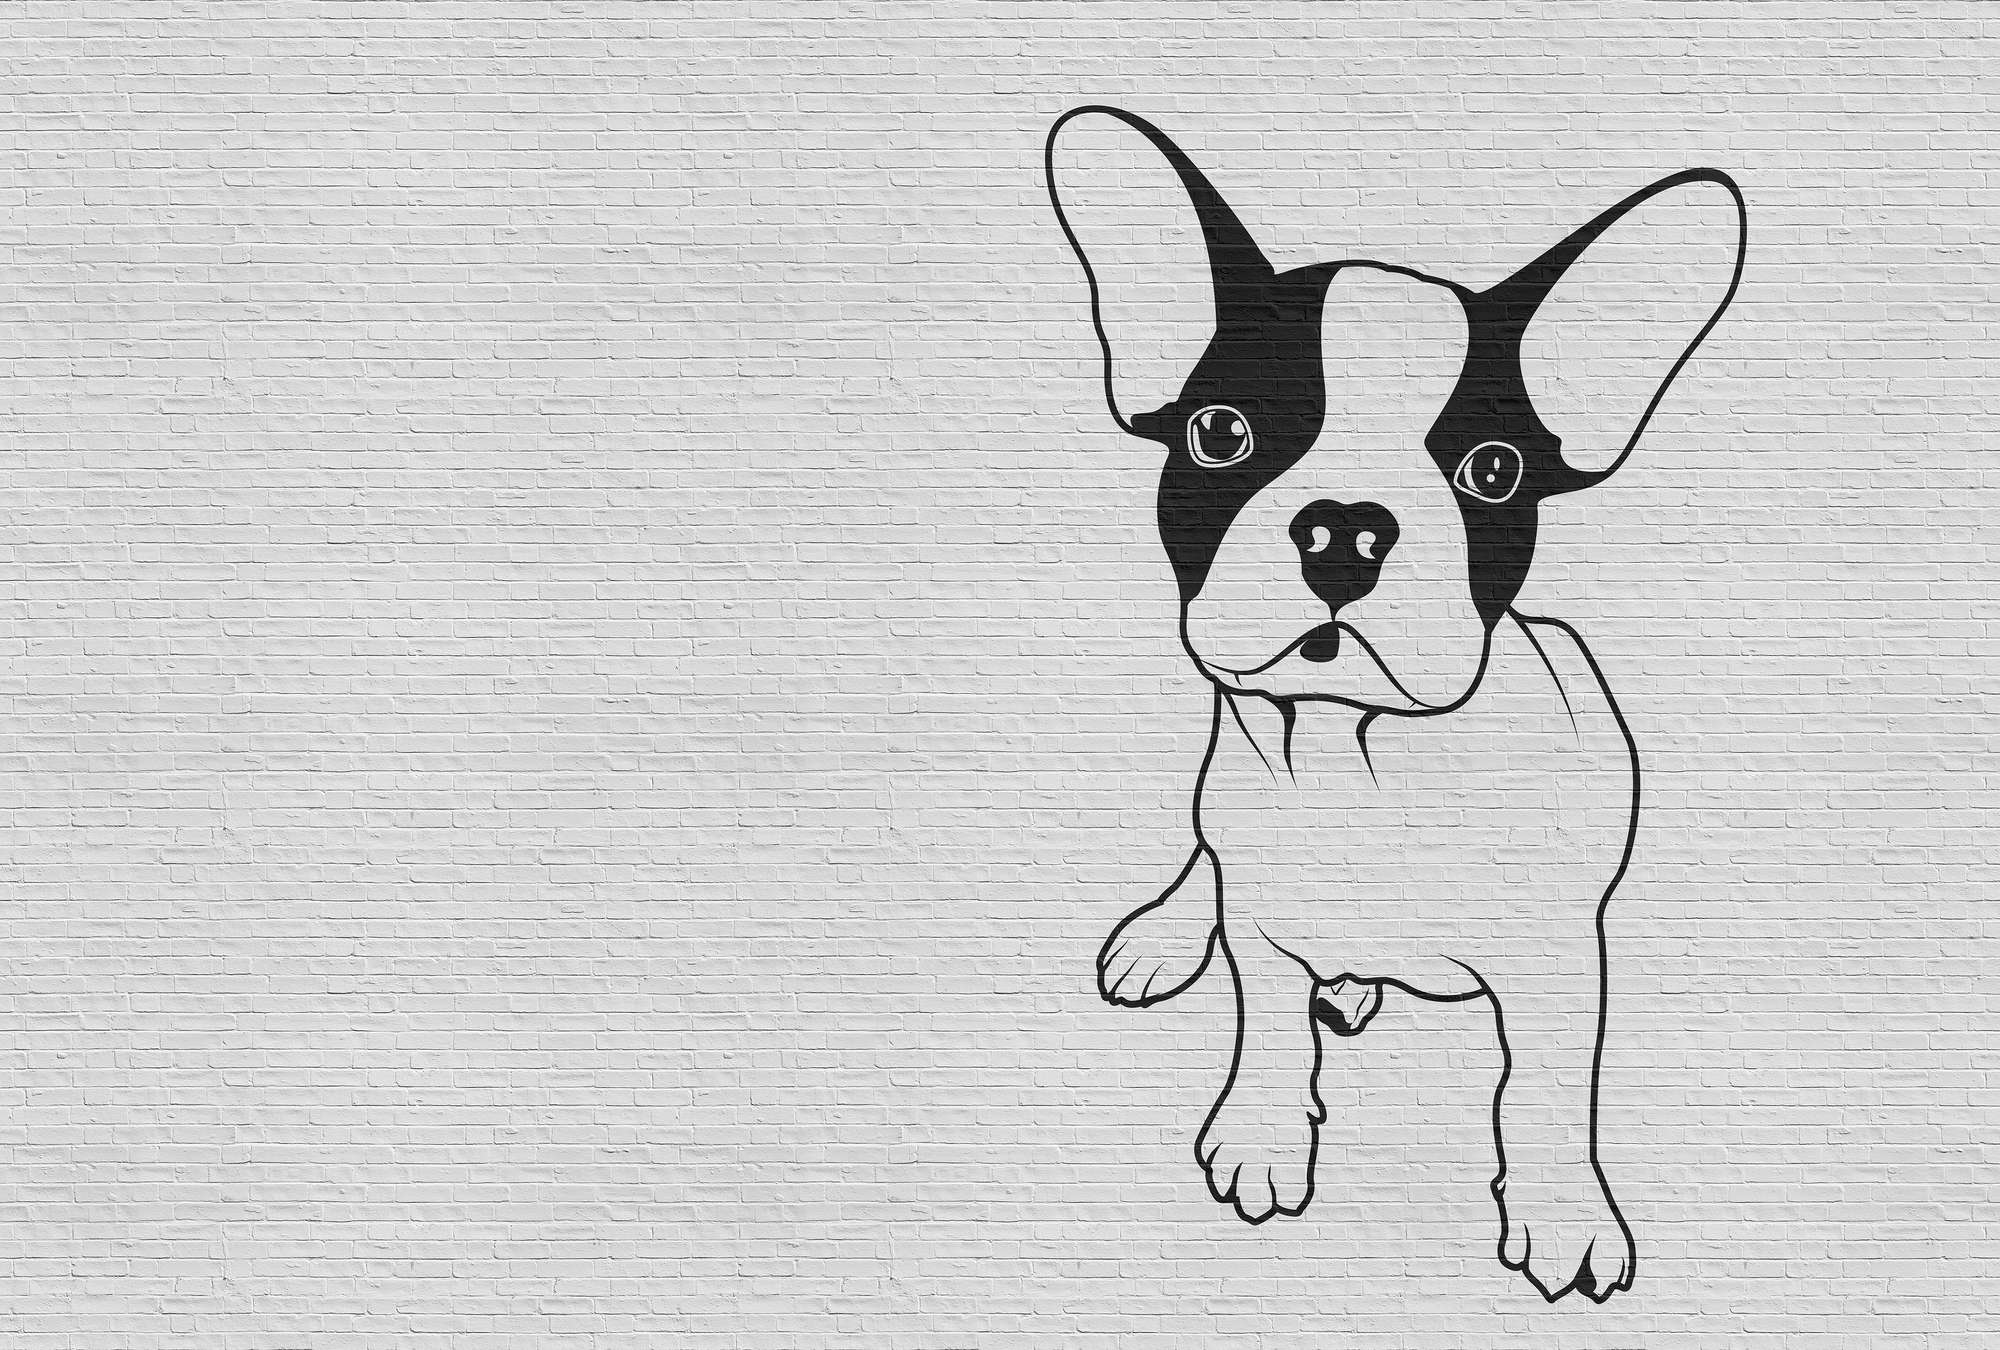             Tattoo you 2 - French Bulldog Wallpaper, Black and White - Grey, Black | Matt Smooth Non-woven
        